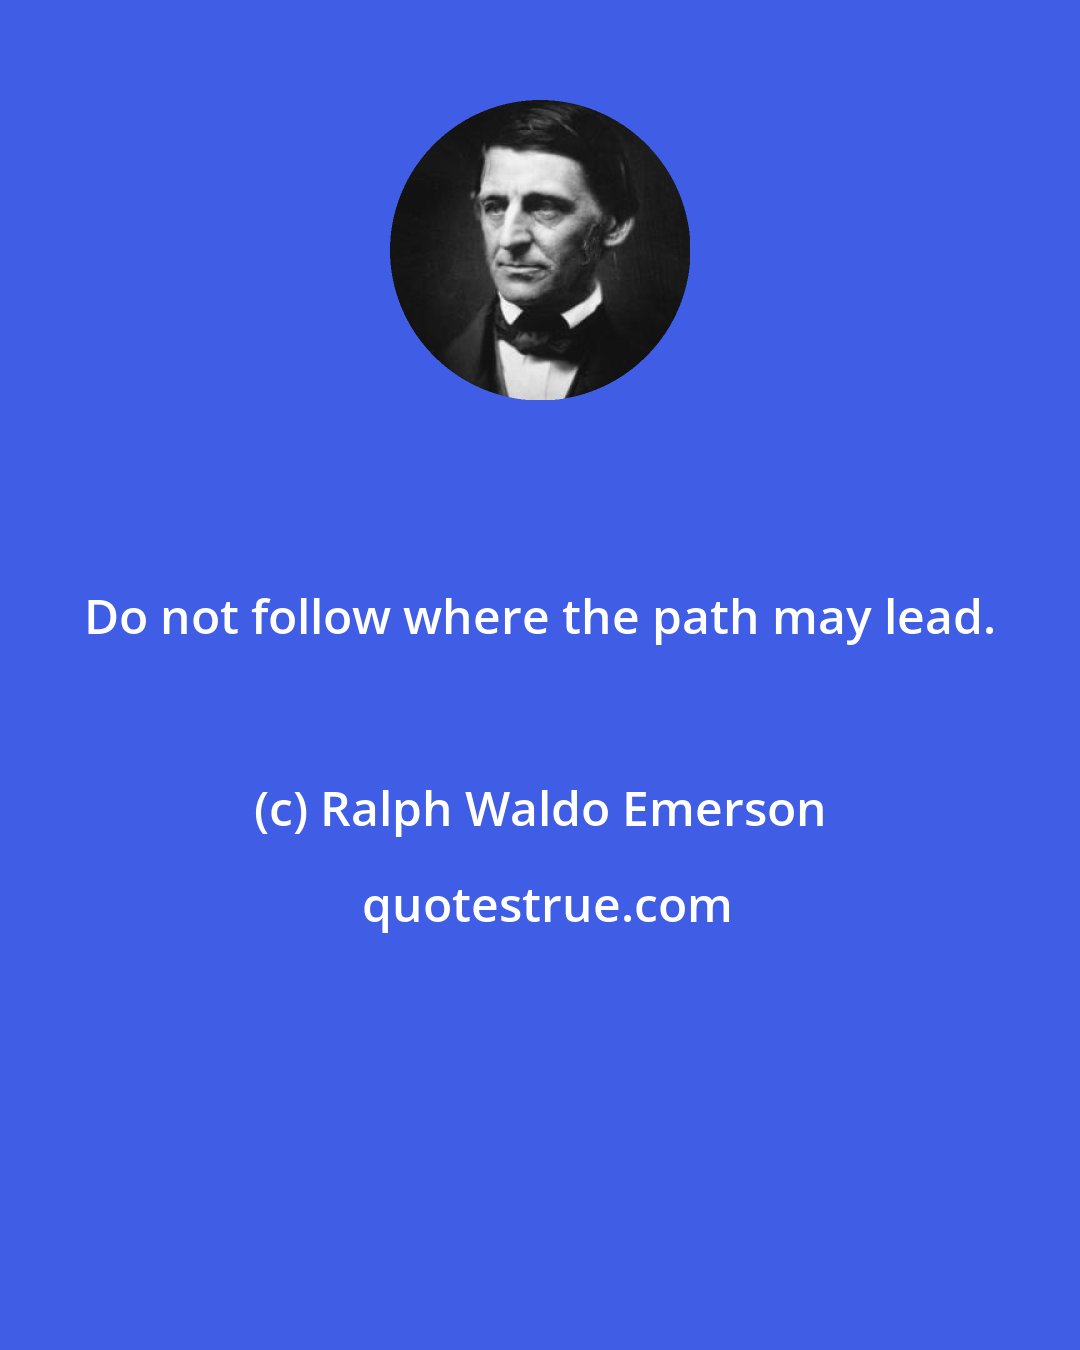 Ralph Waldo Emerson: Do not follow where the path may lead.